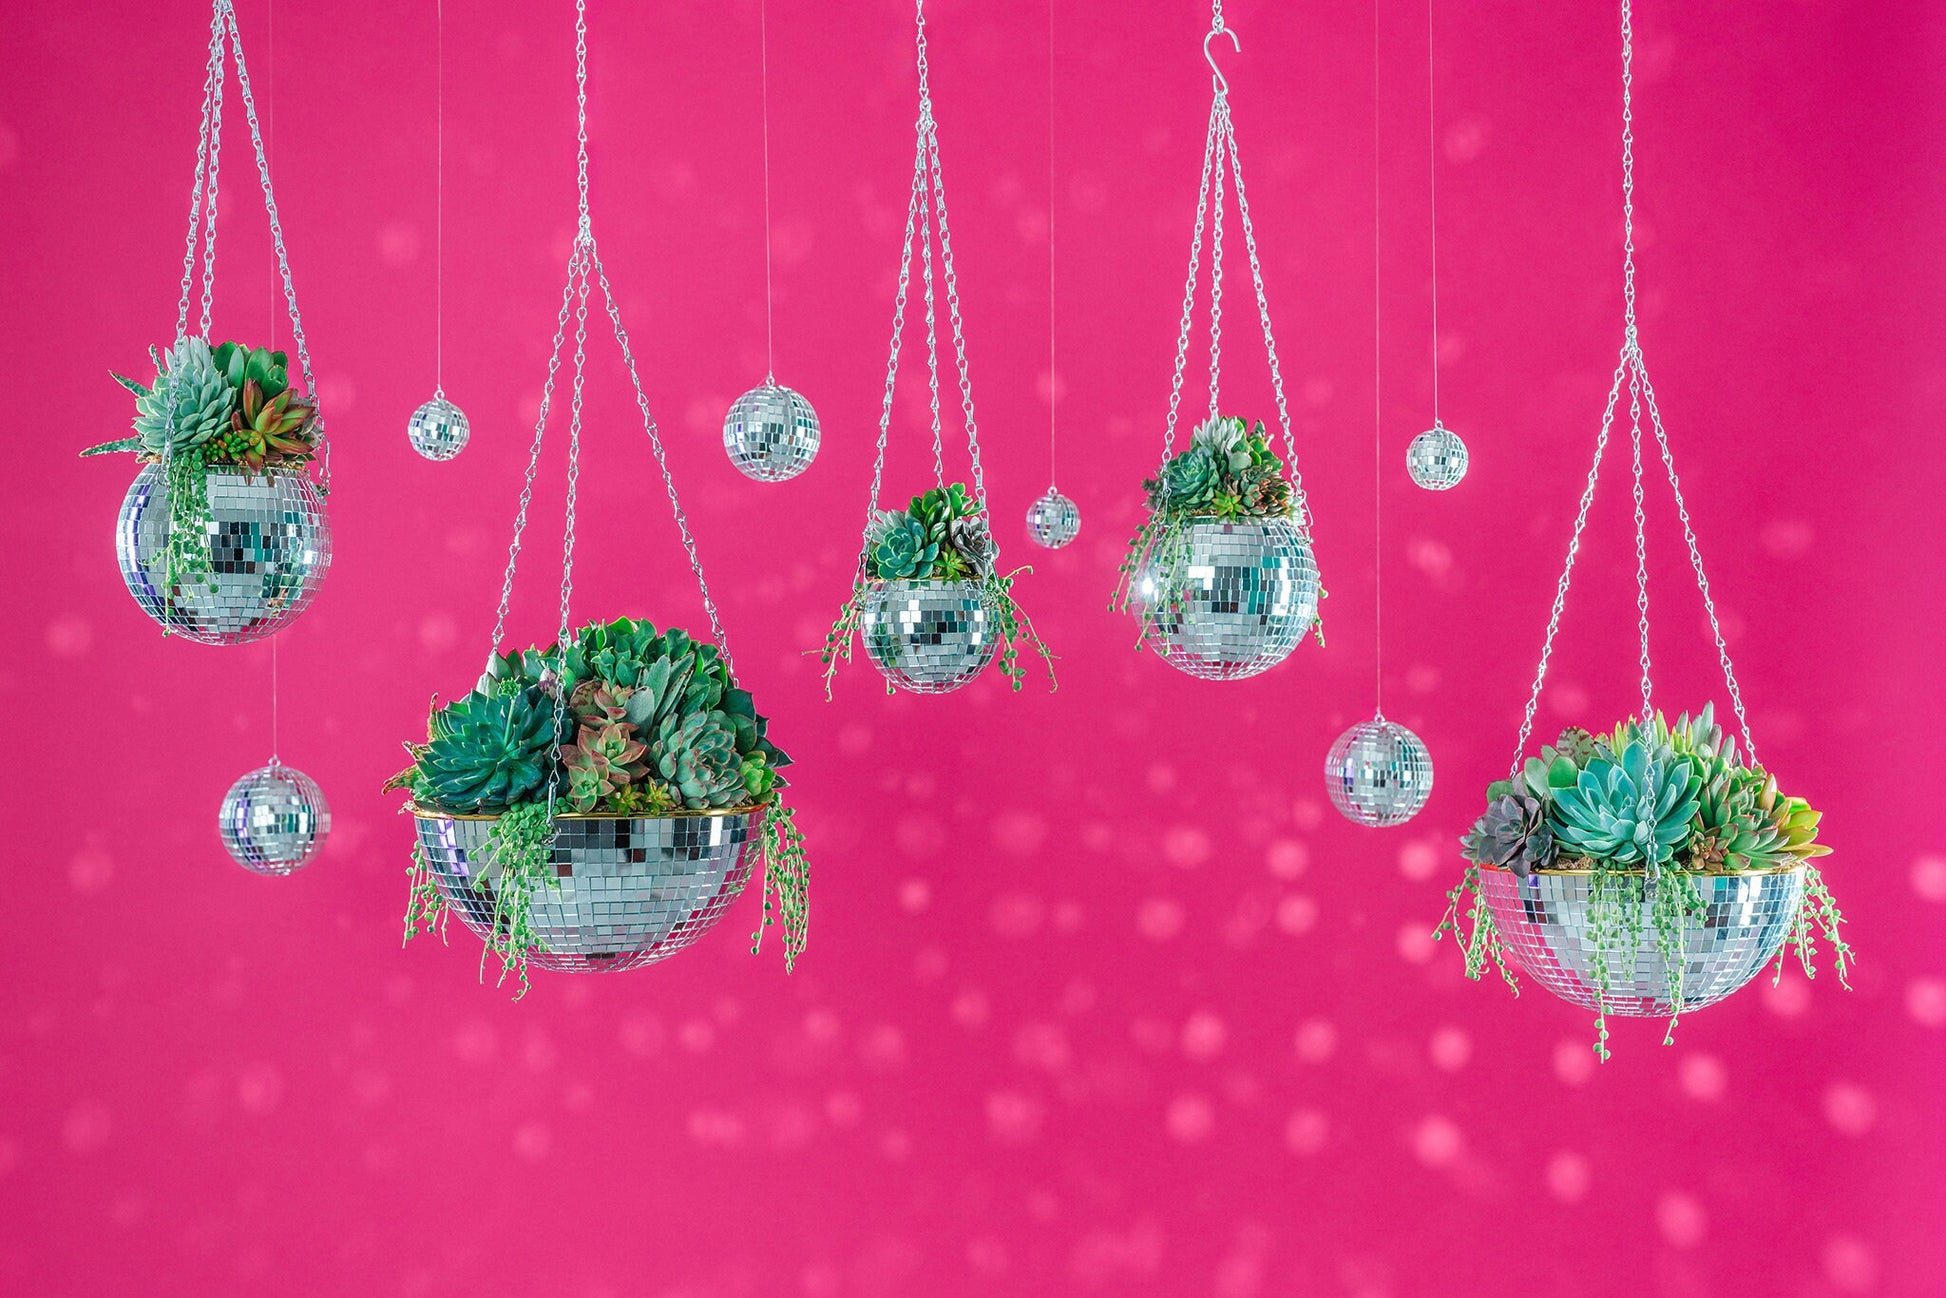 Mini Disco Ball Succulent Arrangement Planter- Hang or Tabletop Decor. Festive, Retro Living Succulent Gift or Centerpiece for Events